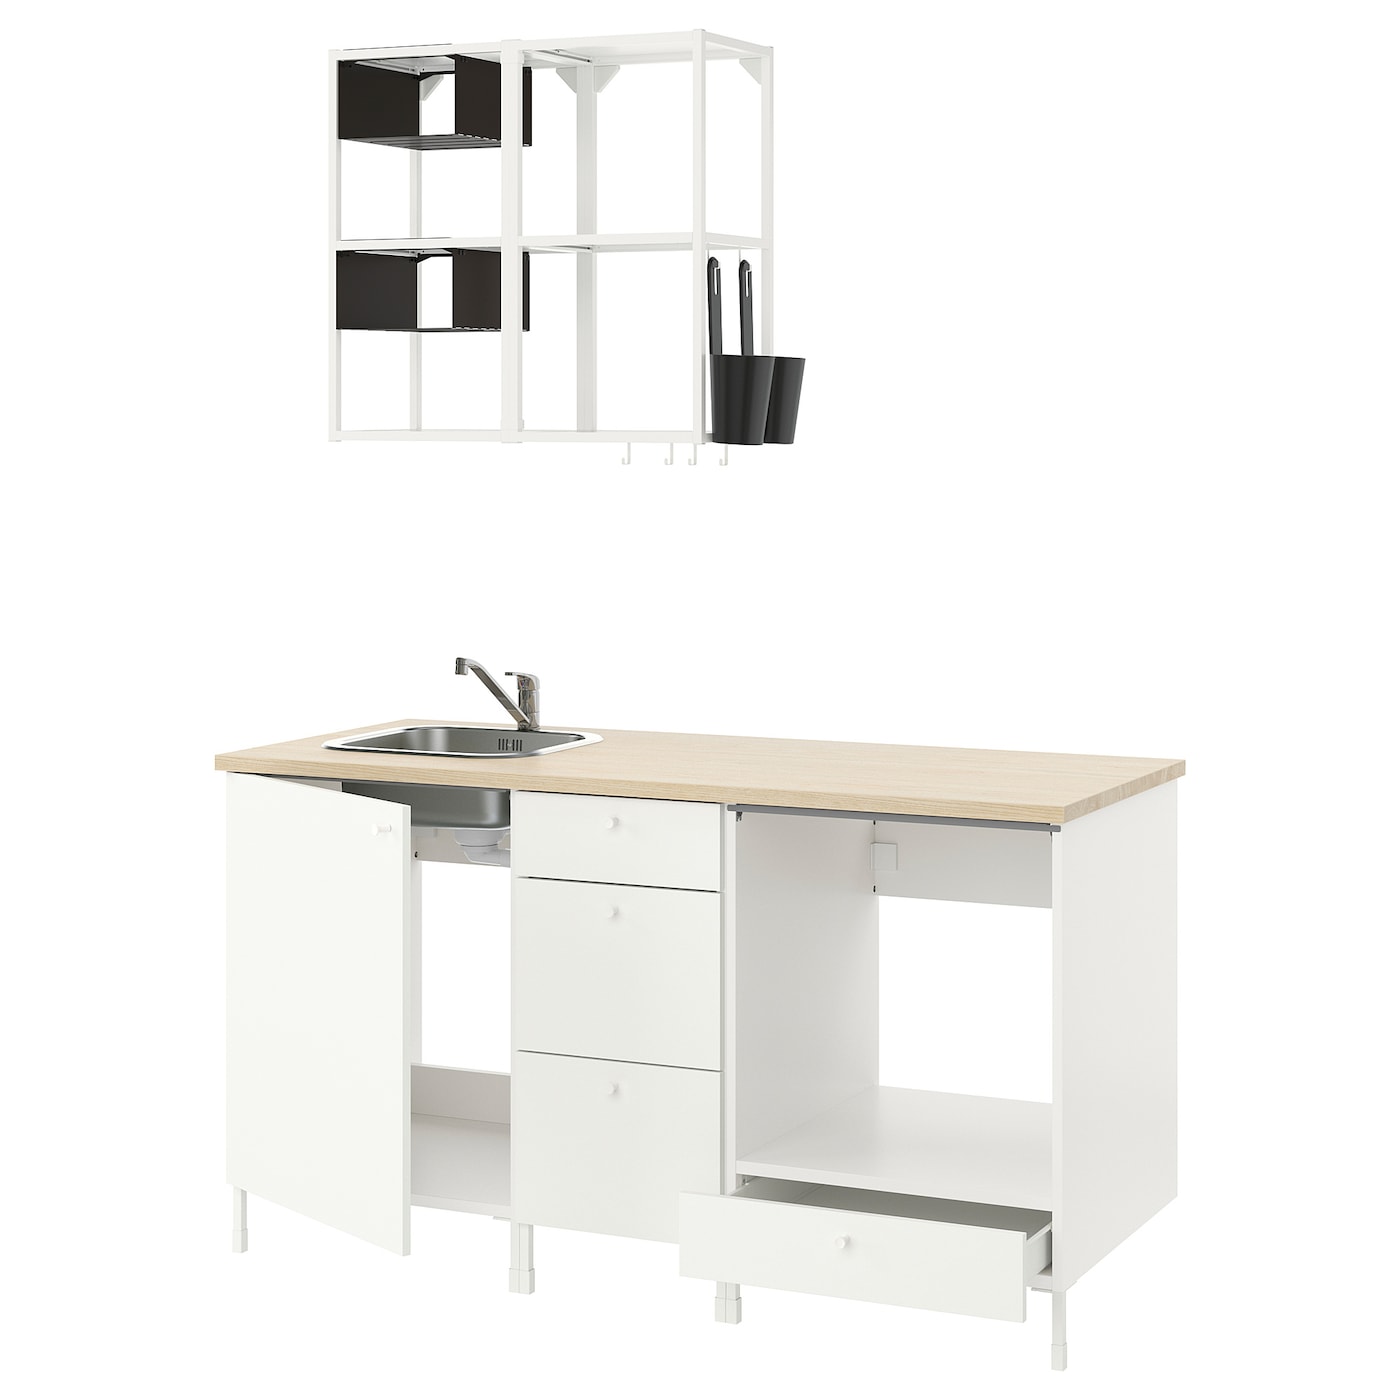 Кухонная комбинация для хранения - ENHET  IKEA/ ЭНХЕТ ИКЕА, 163х63,5х222 см, белый/бежевый